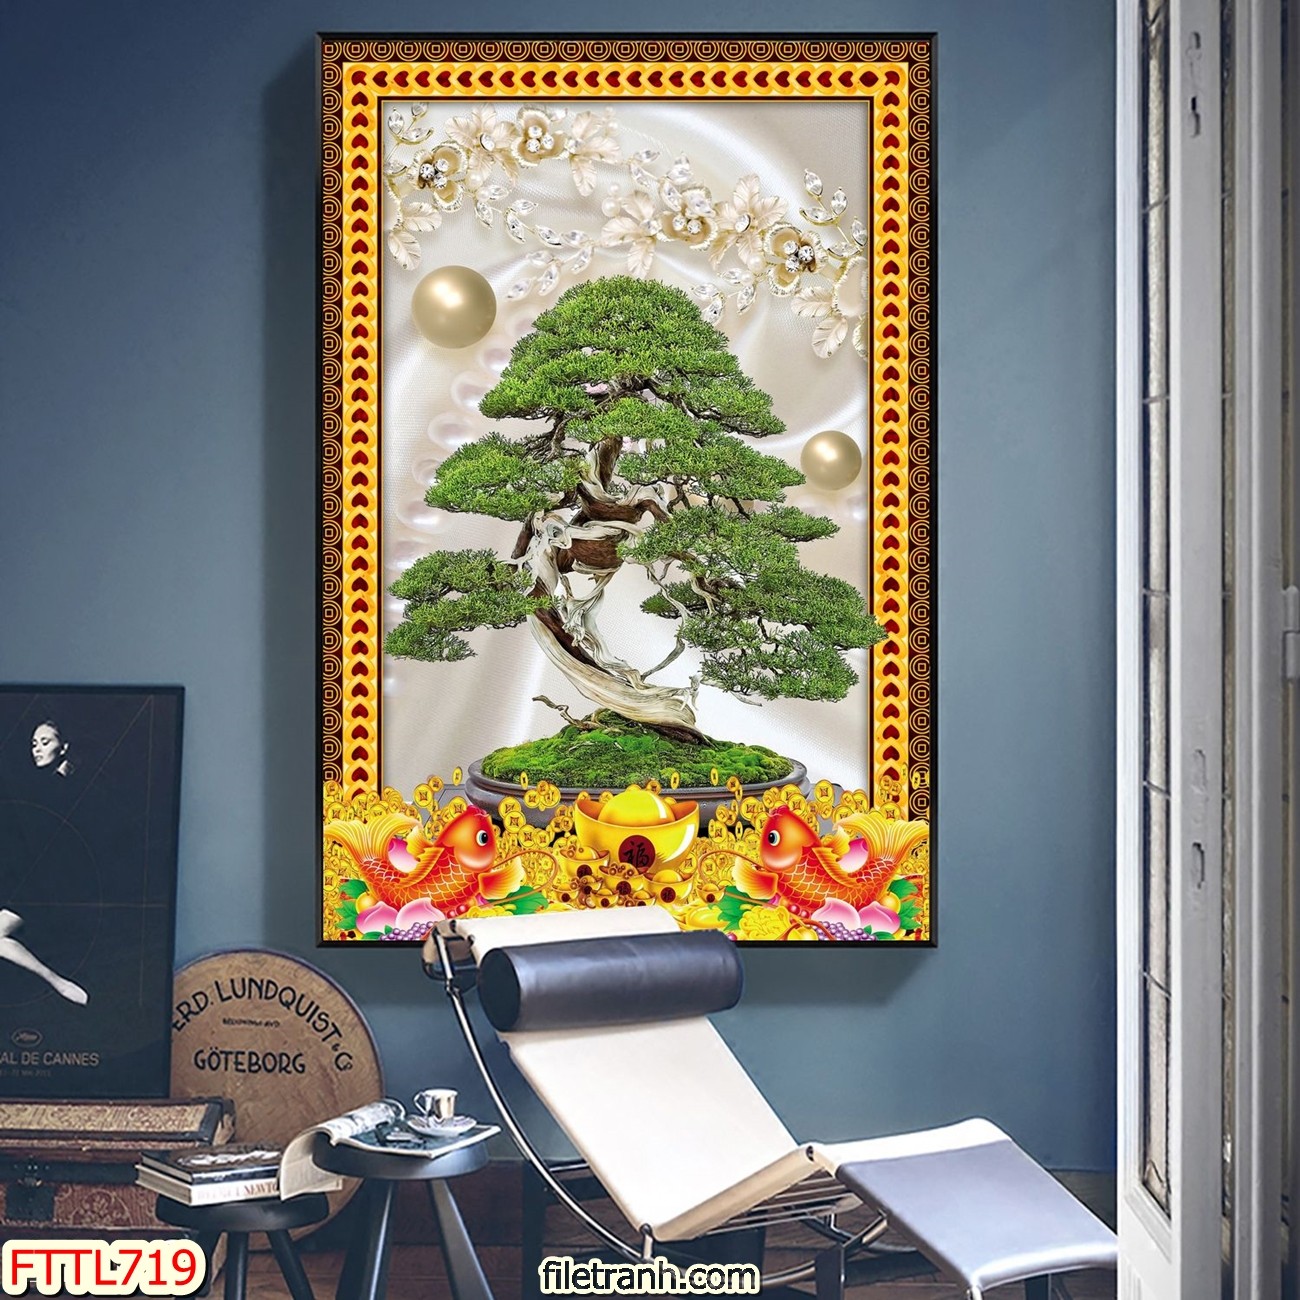 https://filetranh.com/file-tranh-chau-mai-bonsai/file-tranh-chau-mai-bonsai-fttl719.html